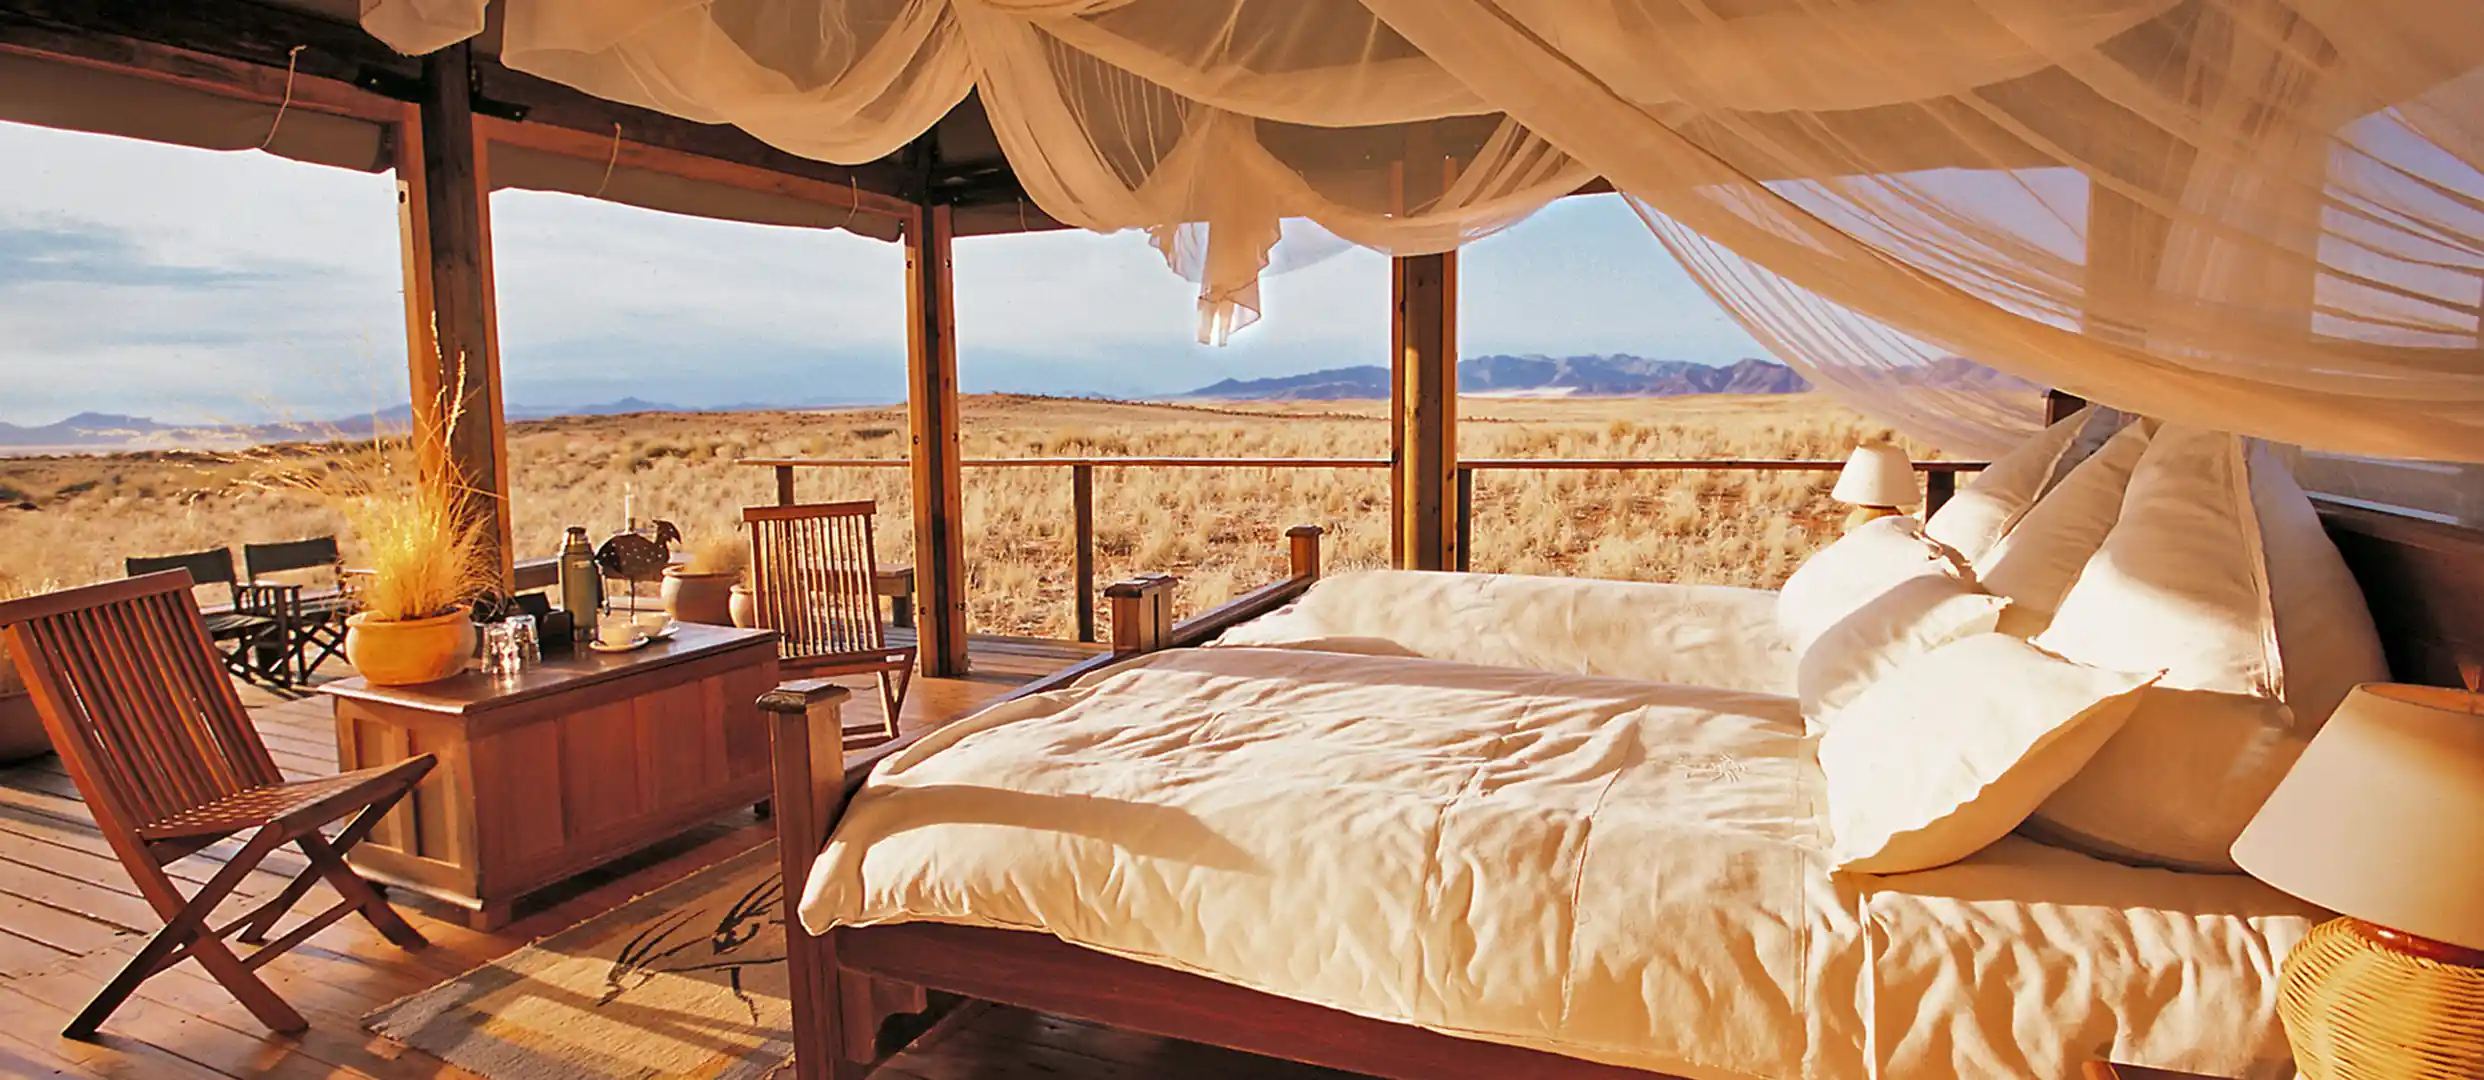 NamibRand Lodge 2